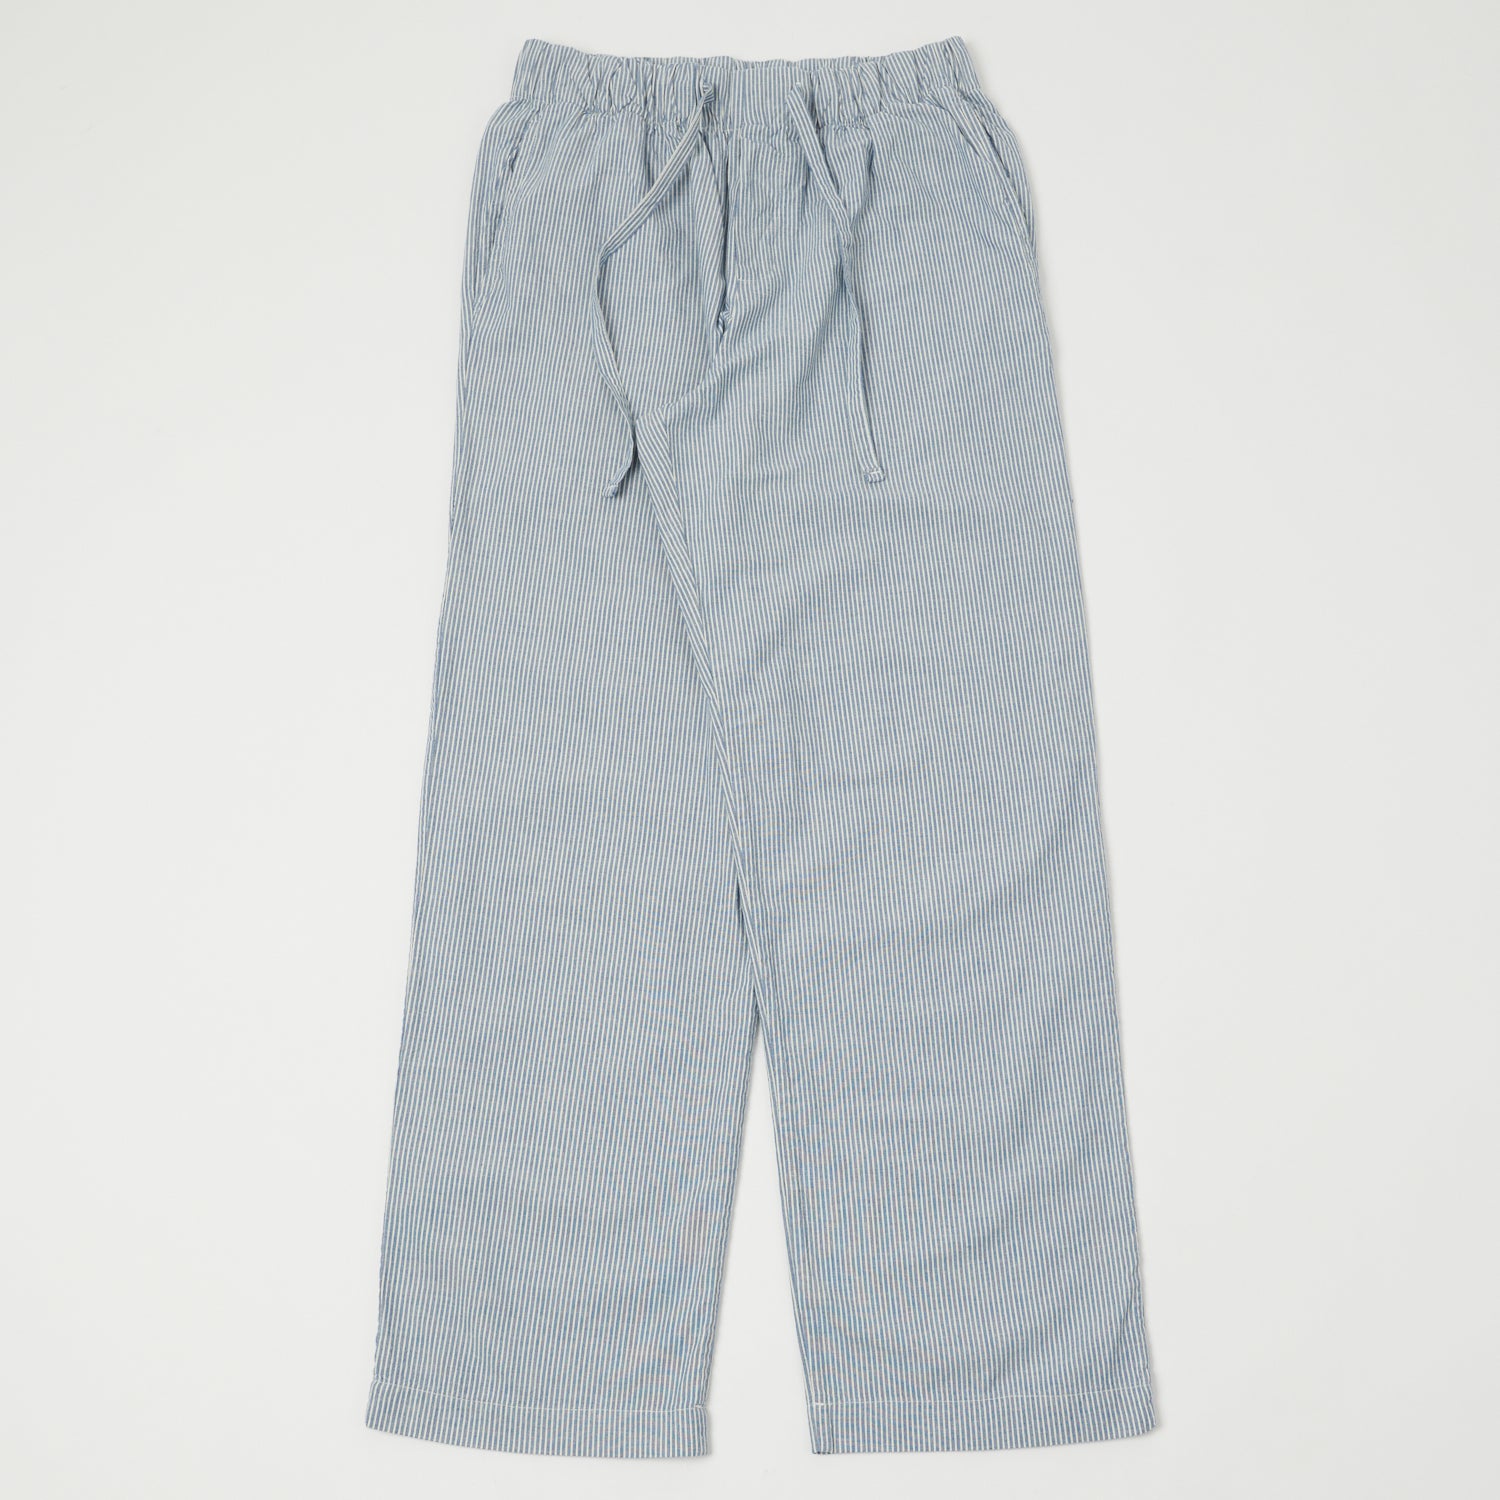 Shoelace Pyjama Pants - Ready to Wear